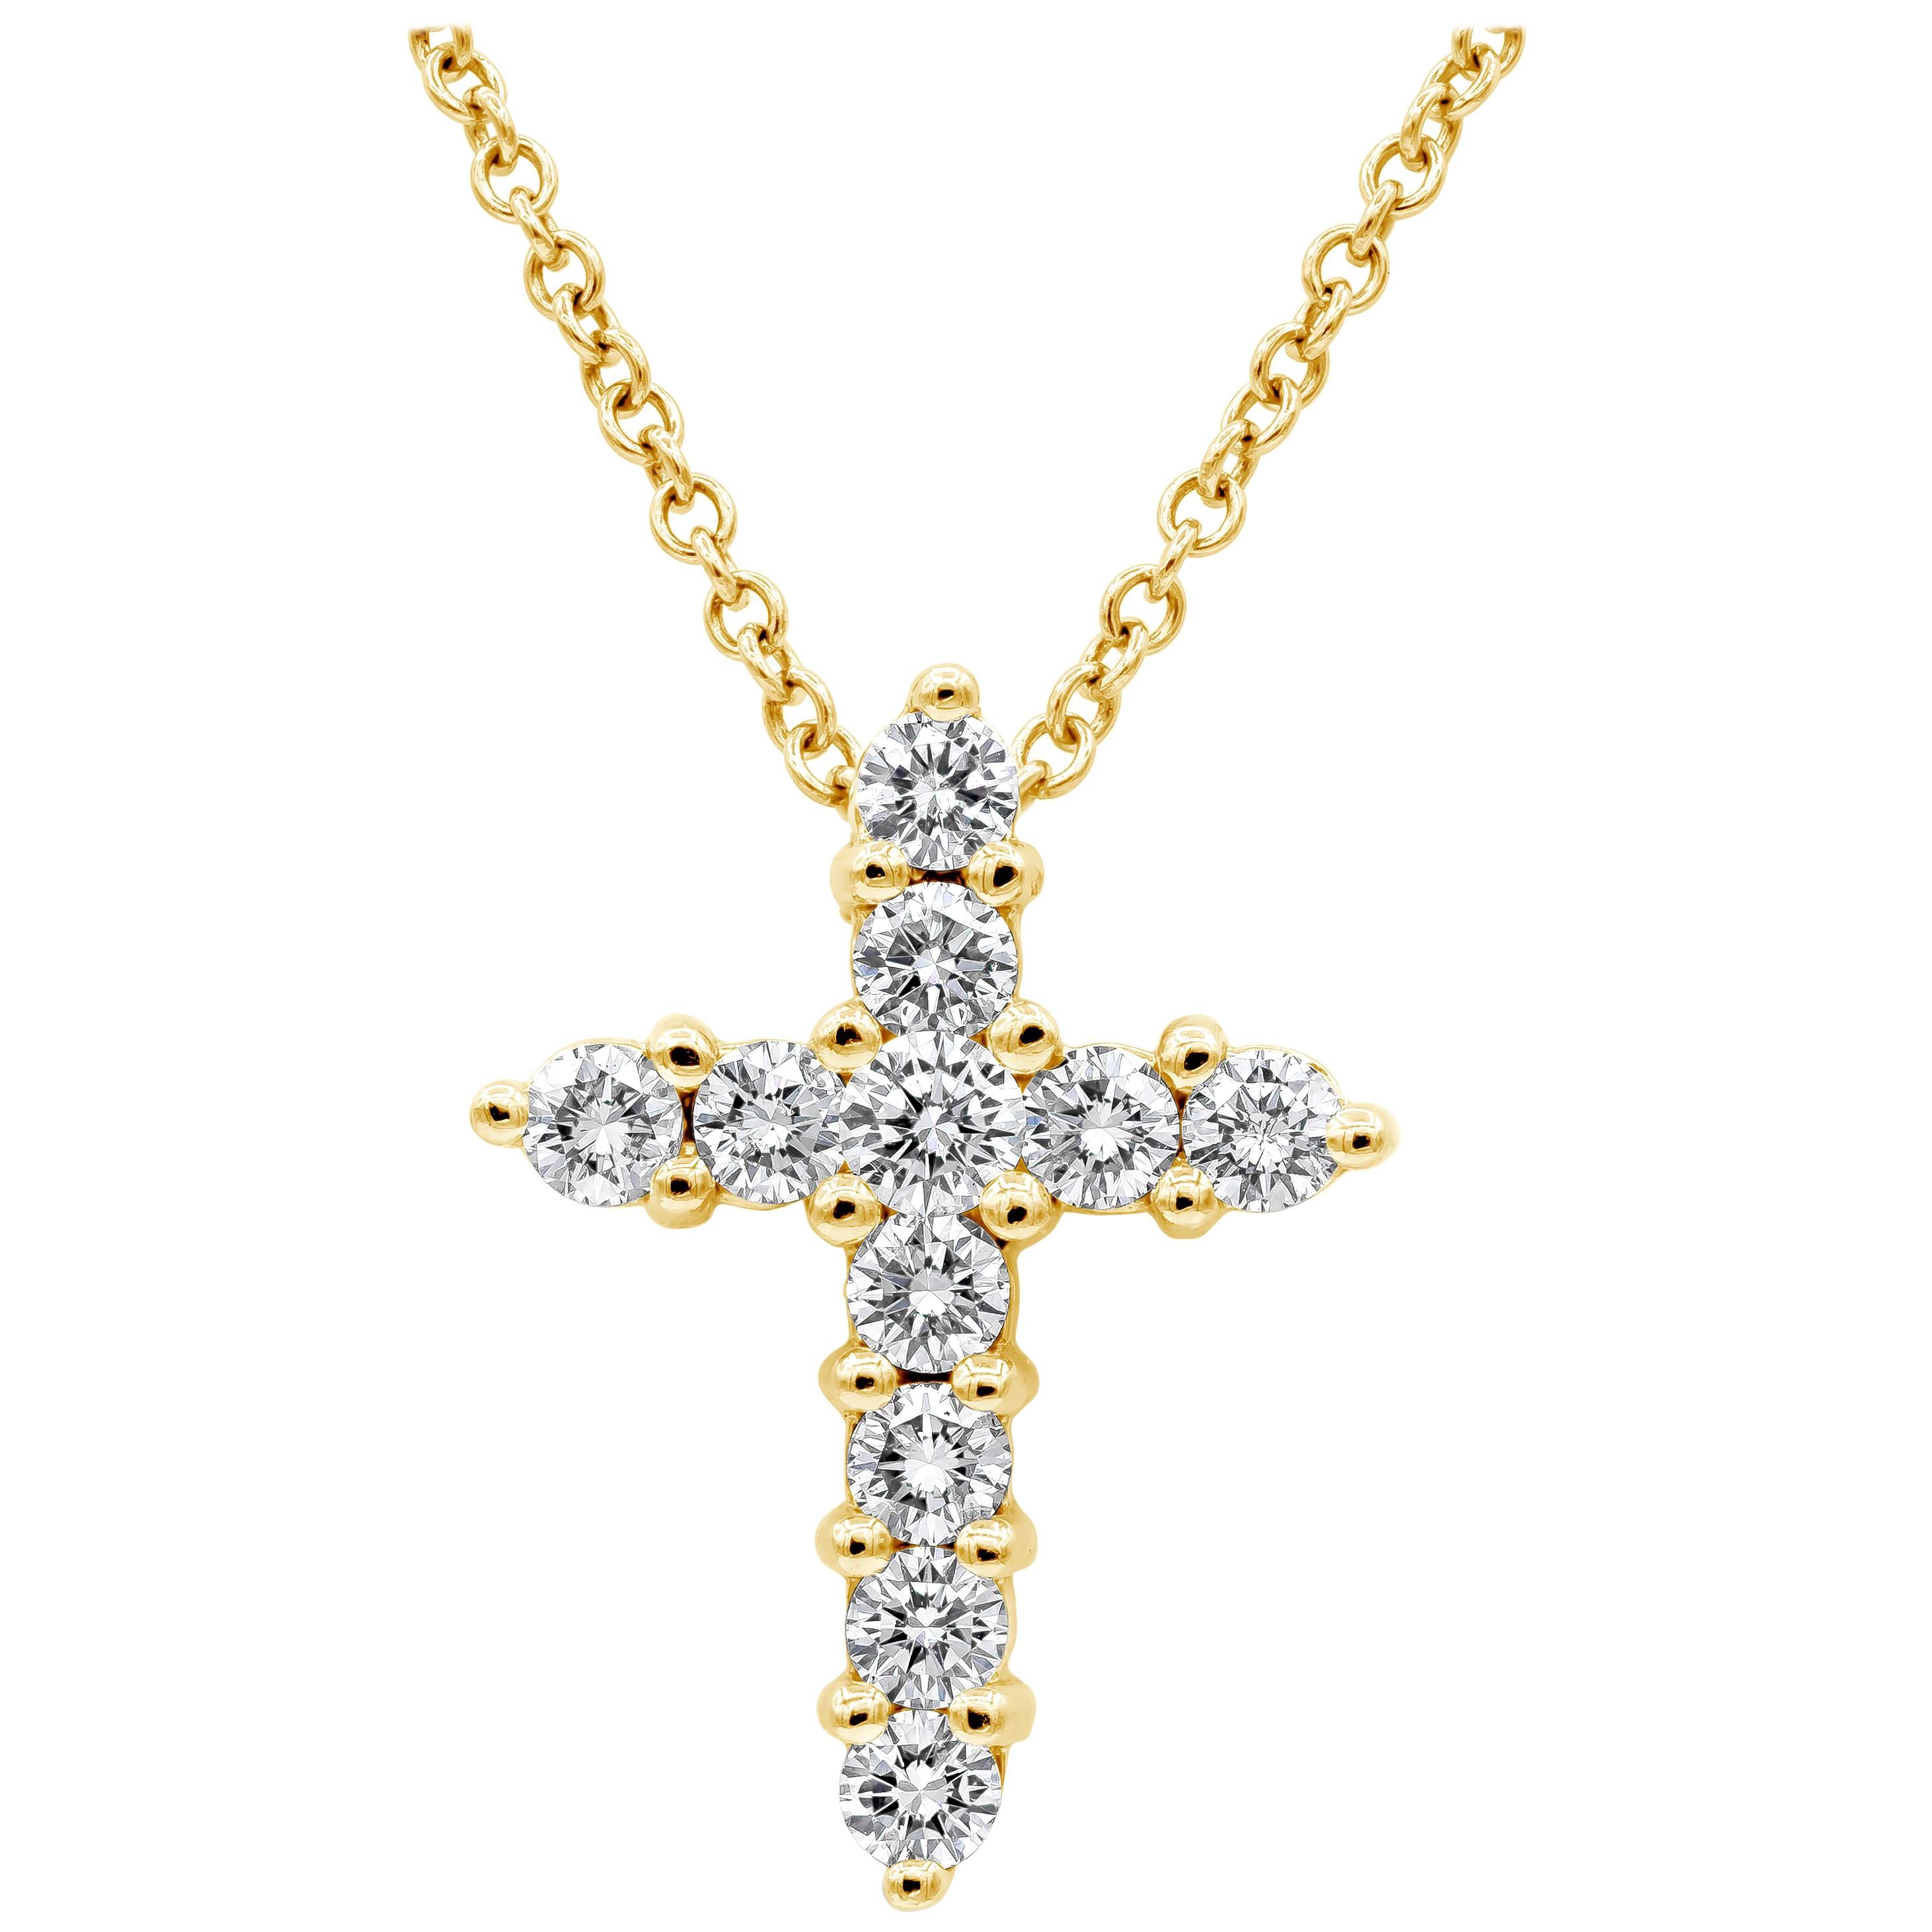 Roman Malakov, 1.04 Carat Diamond Cross Pendant Necklace in Yellow Gold